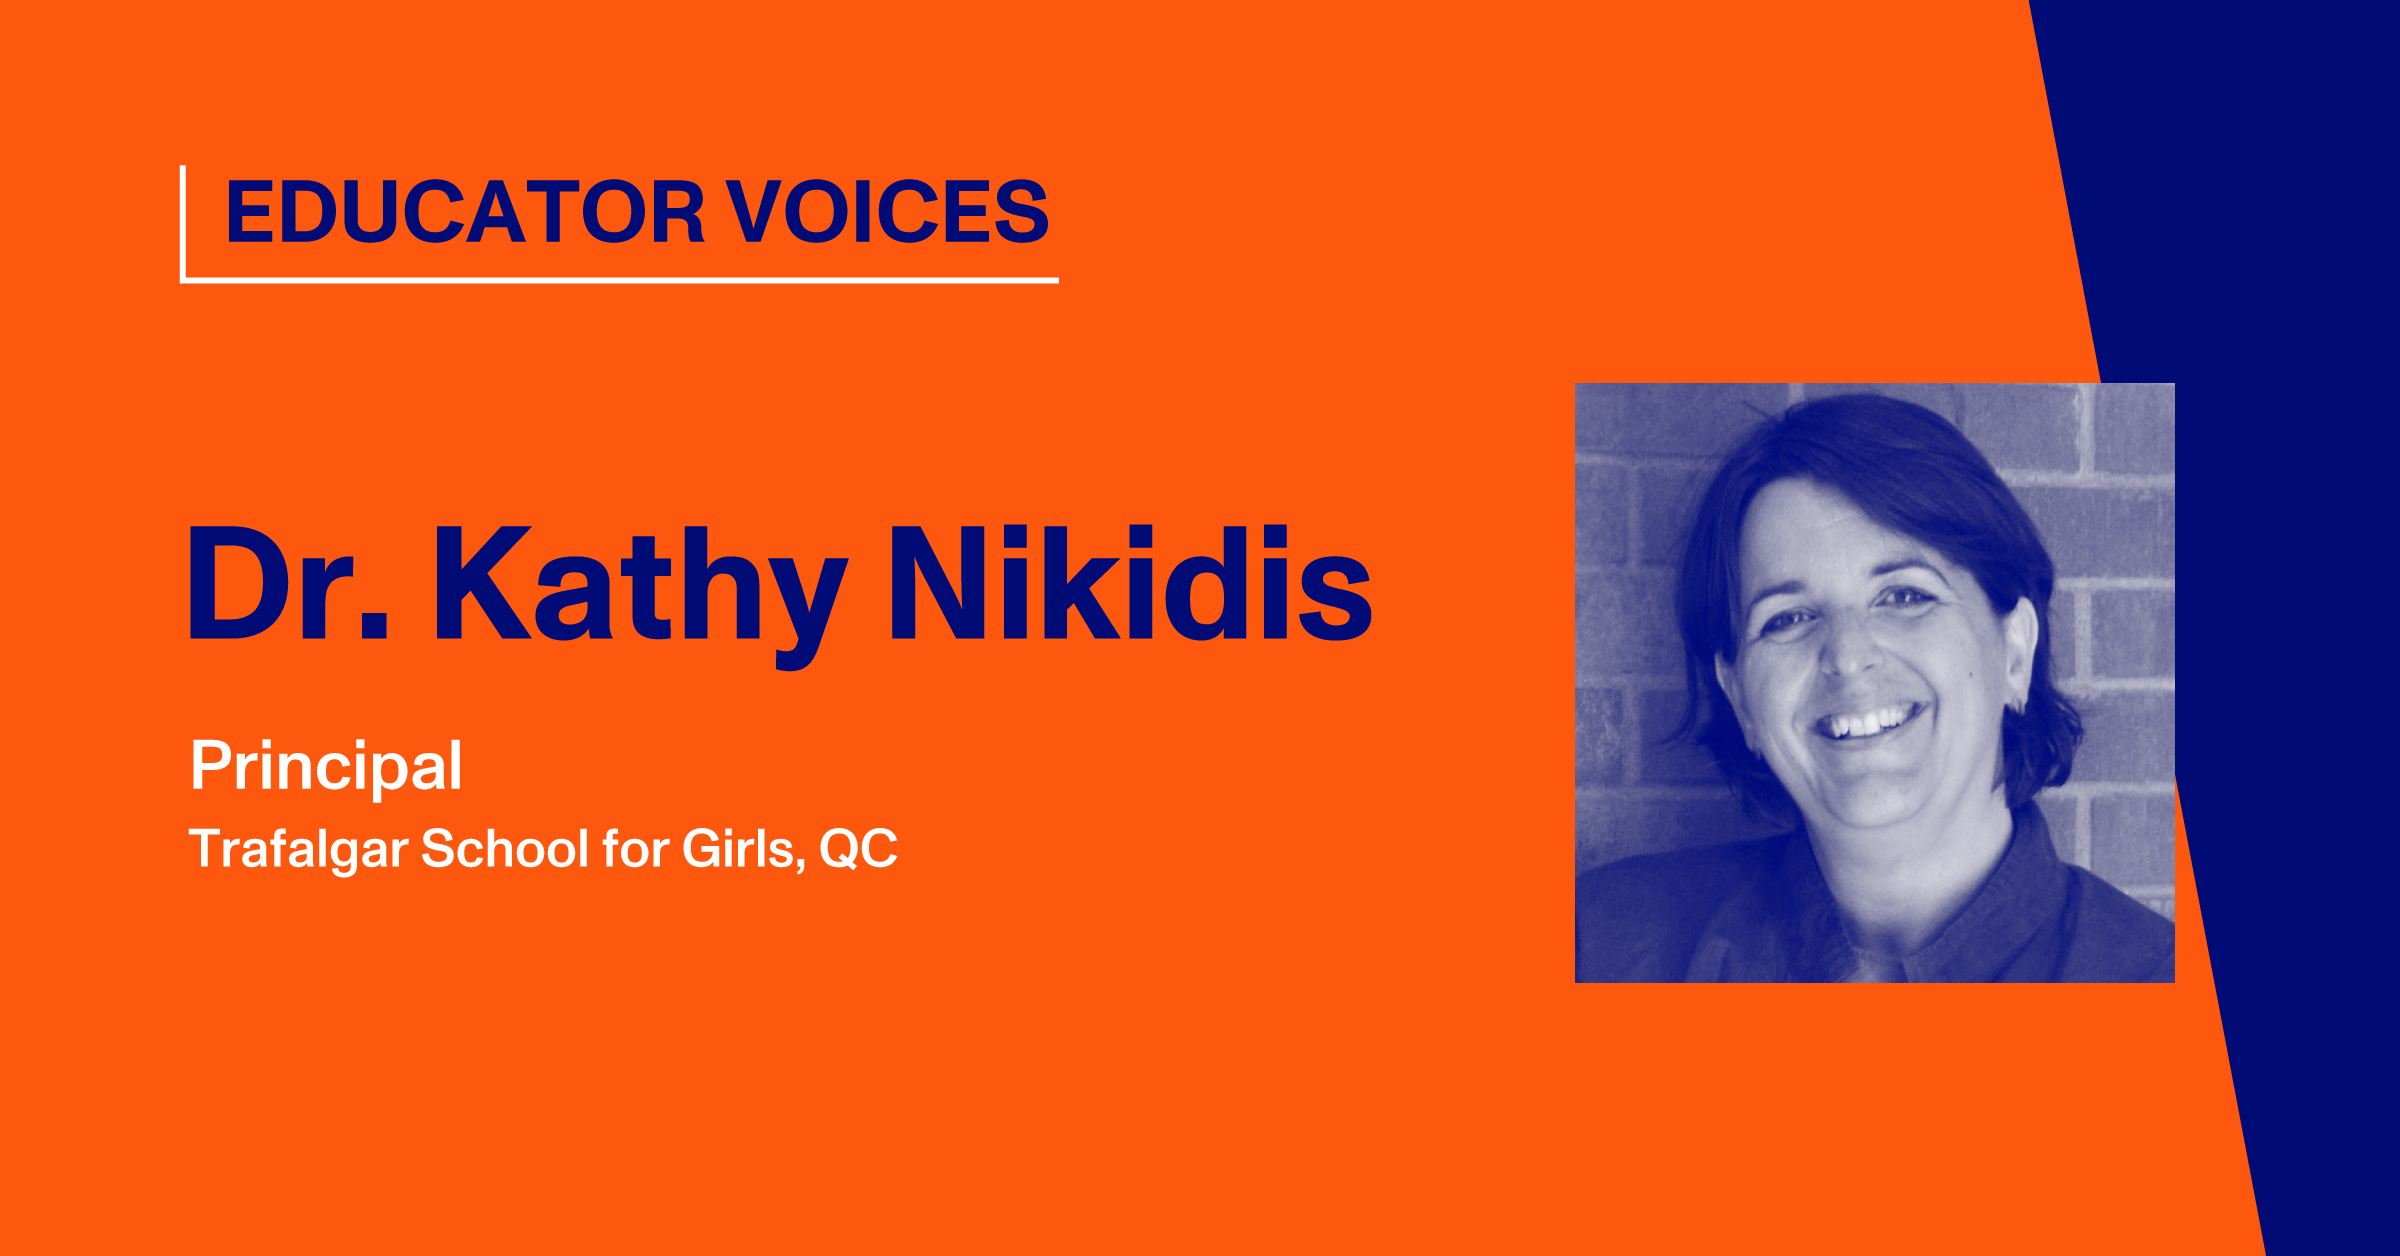 Dr. Kathy Nikidis, Principal, Trafalgar School for Girls, QC